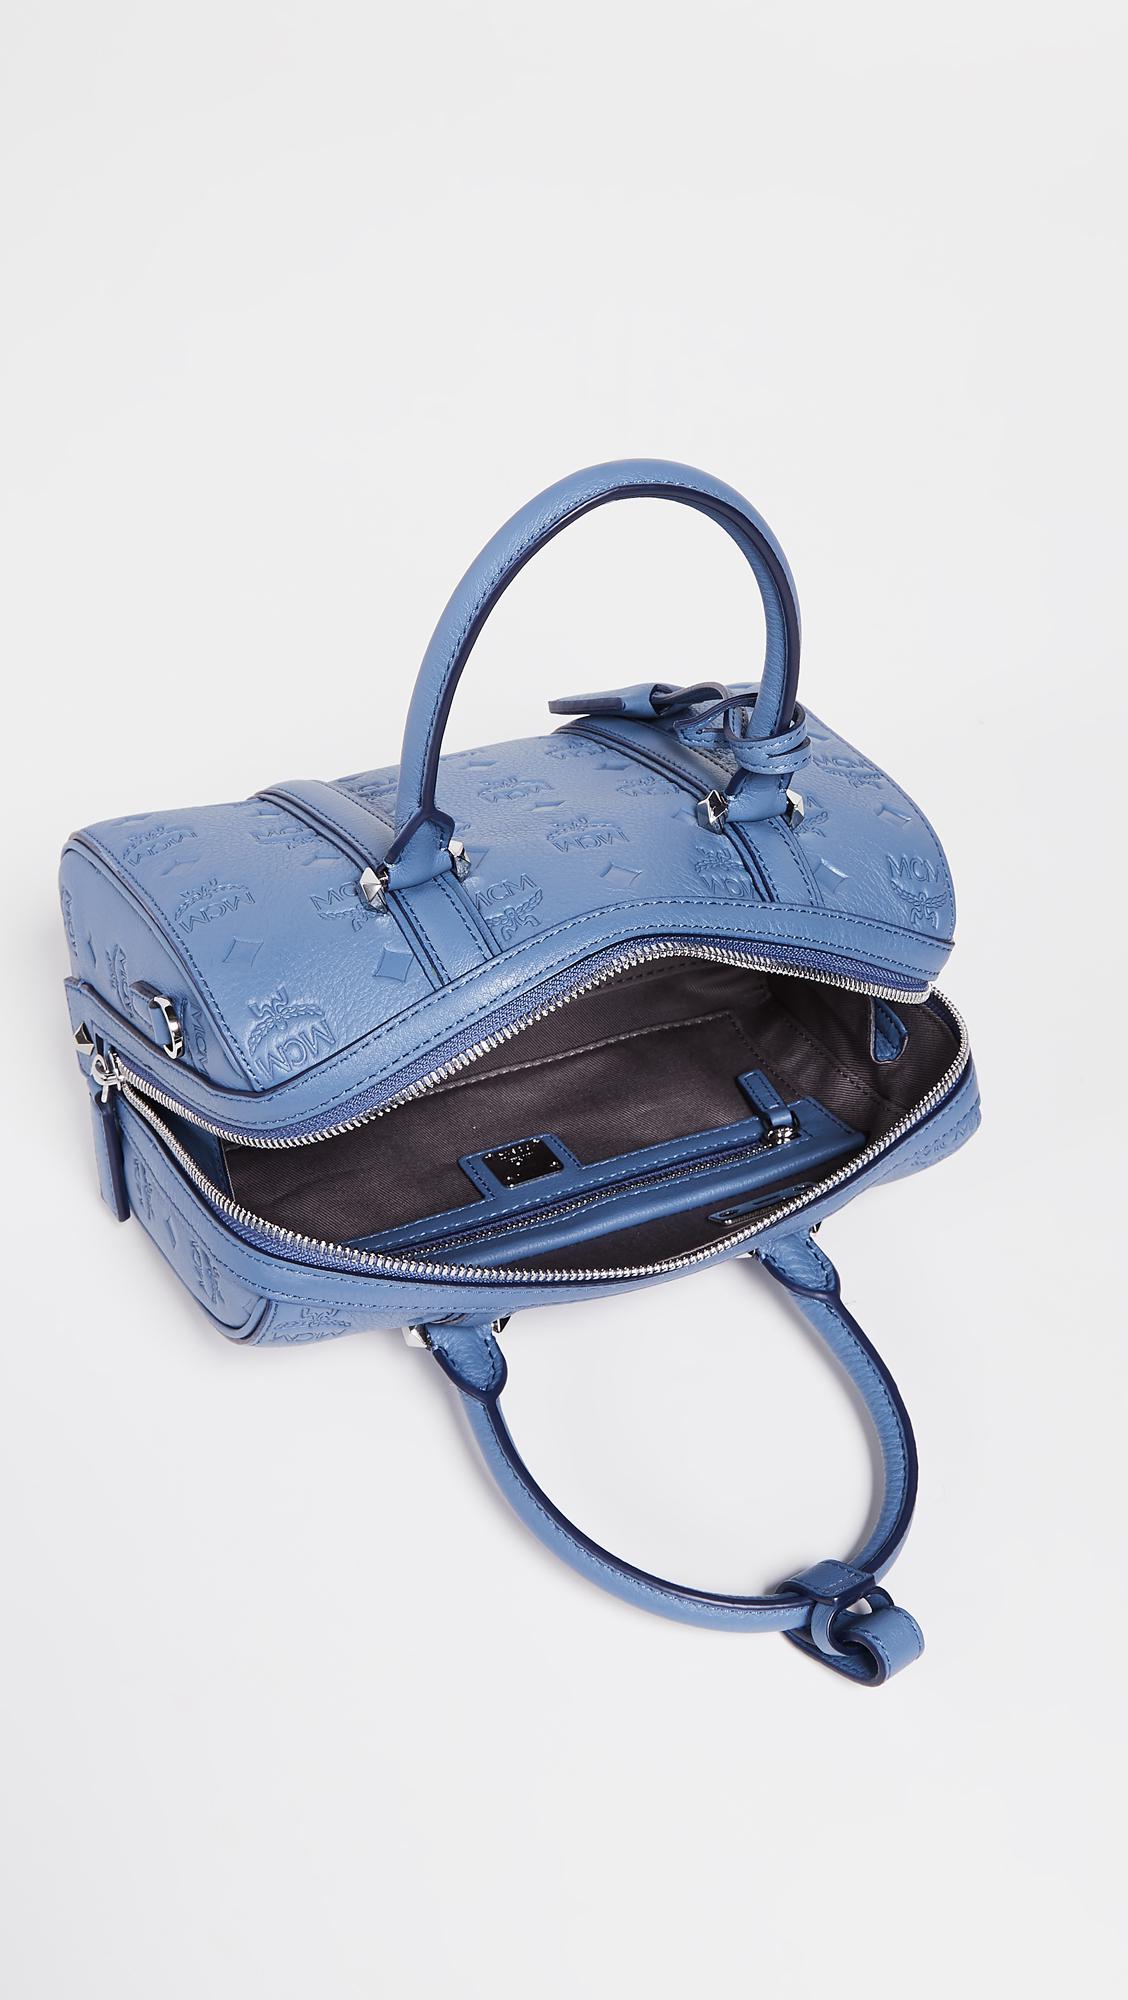 MCM Boston Handbag Blue - $140 (64% Off Retail) - From Happy